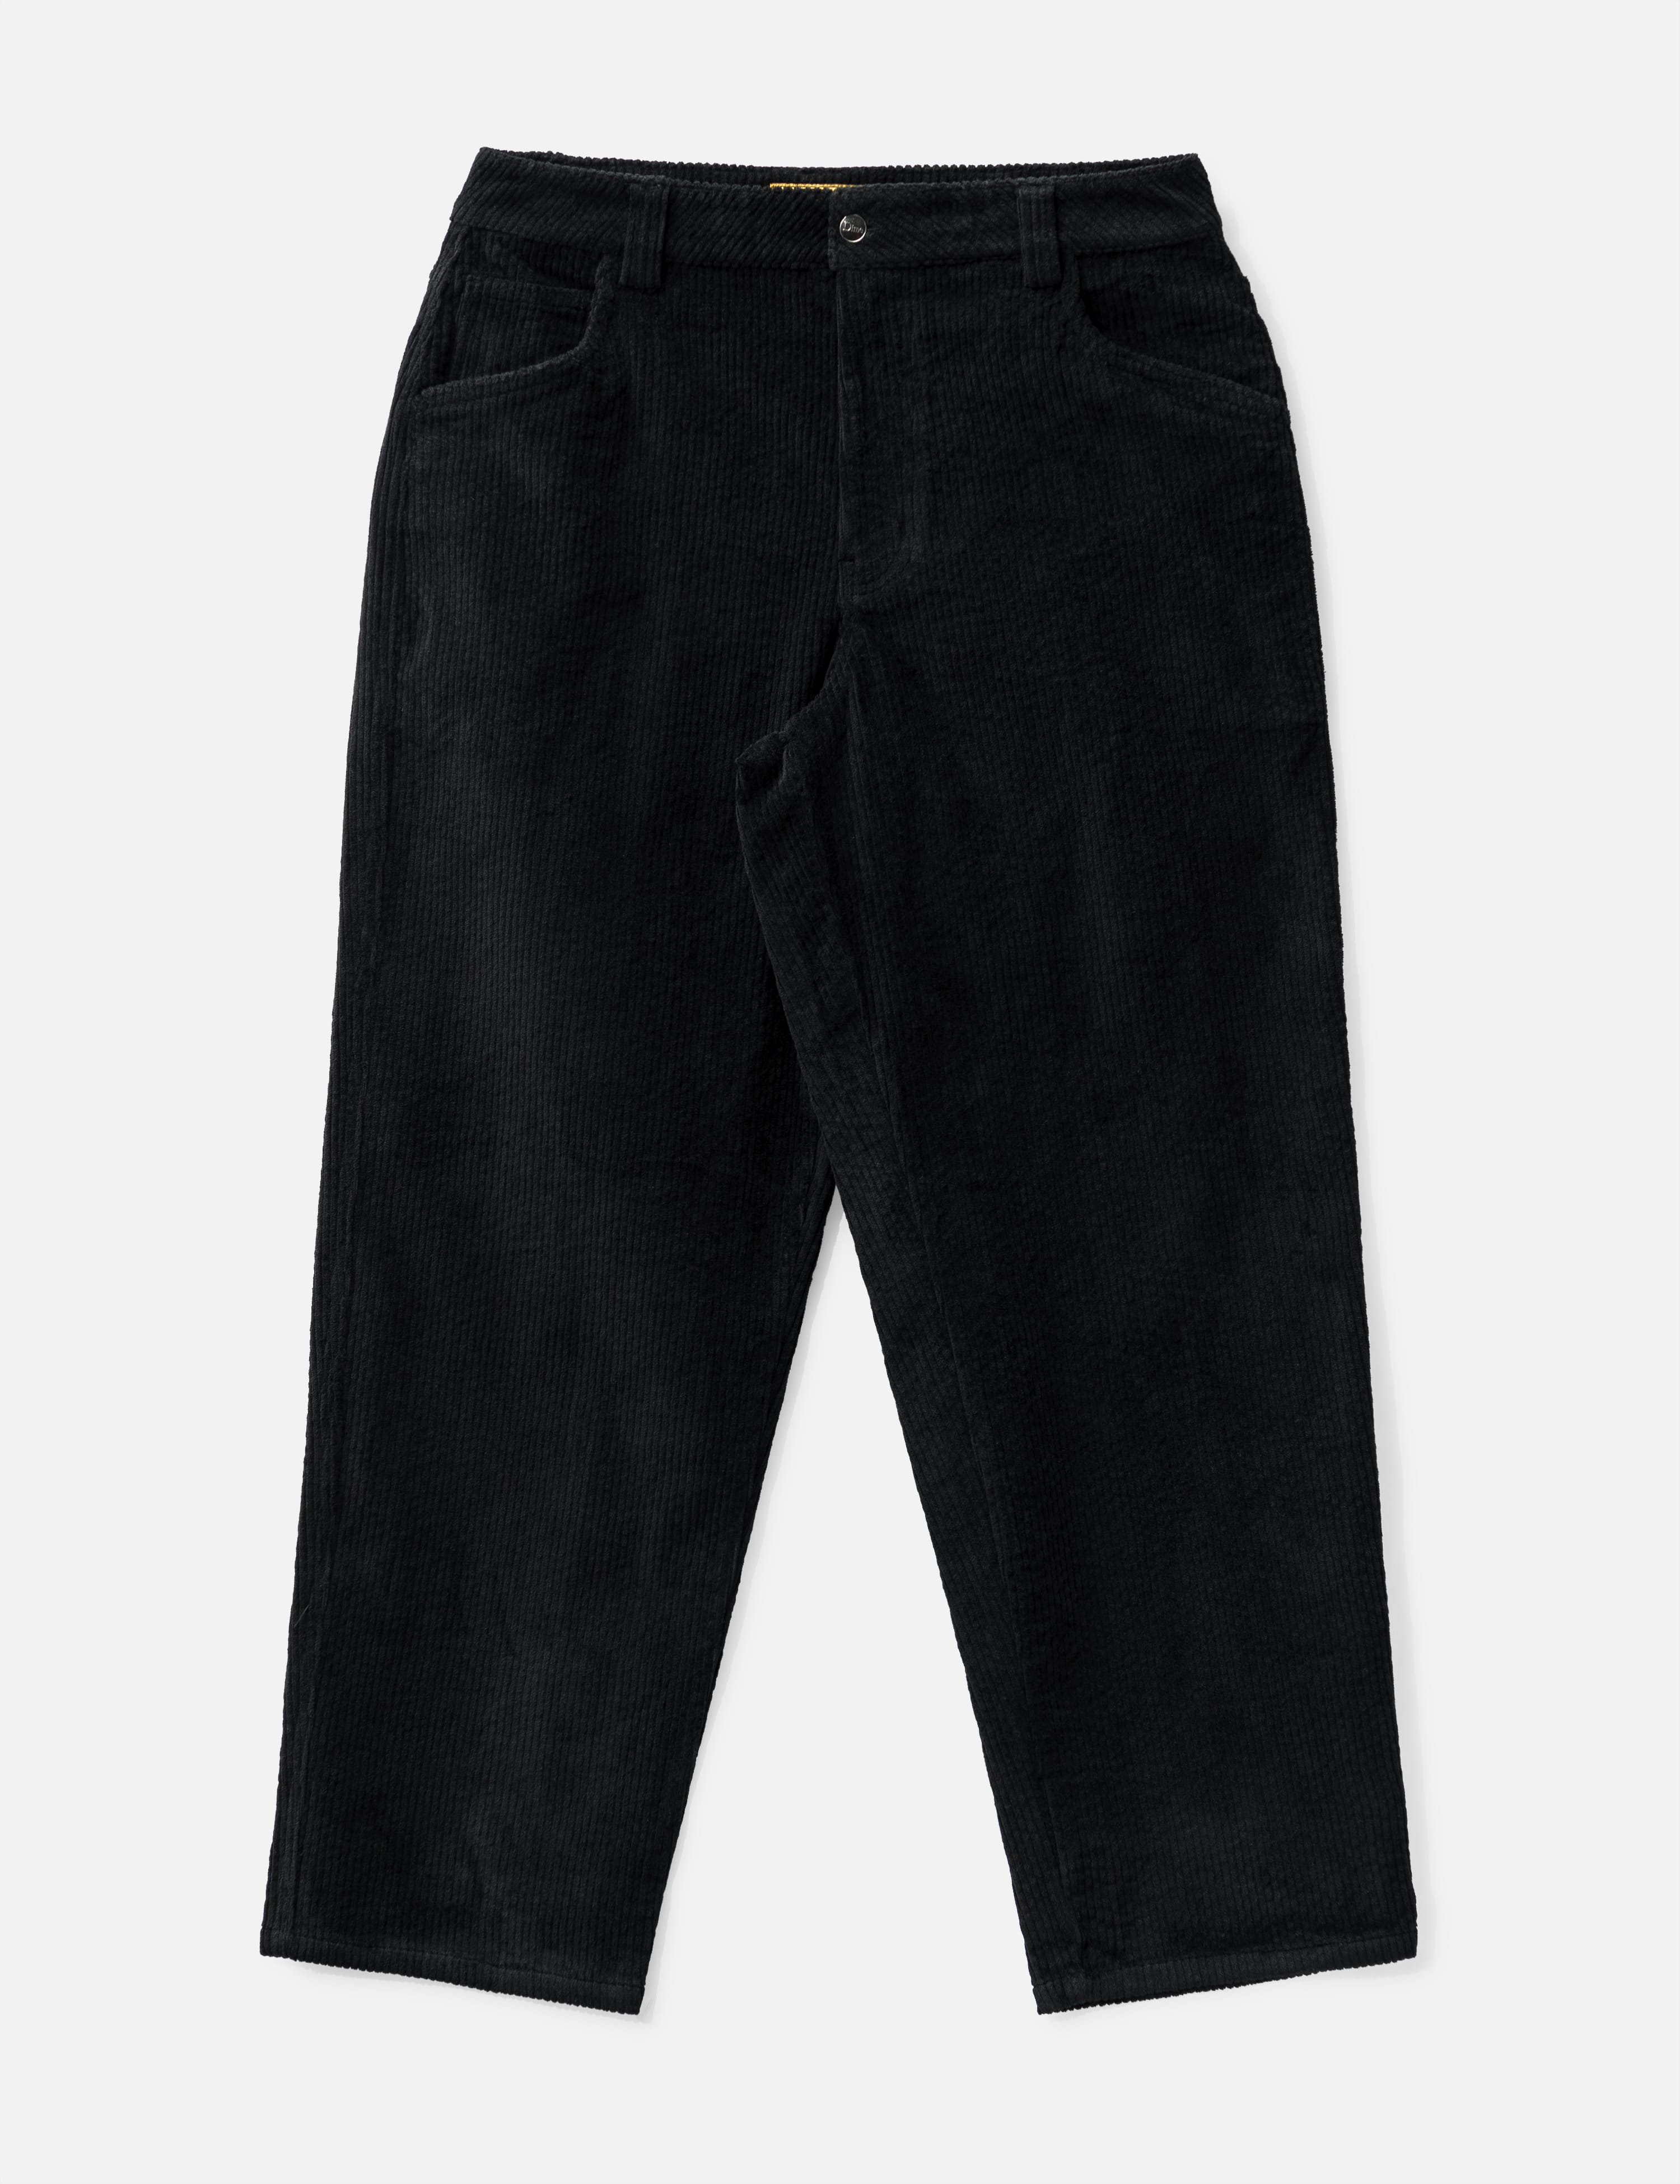 Peter Millar Nanoluxe Men's Classic Corduroy Pants Sz: 36x28 | eBay